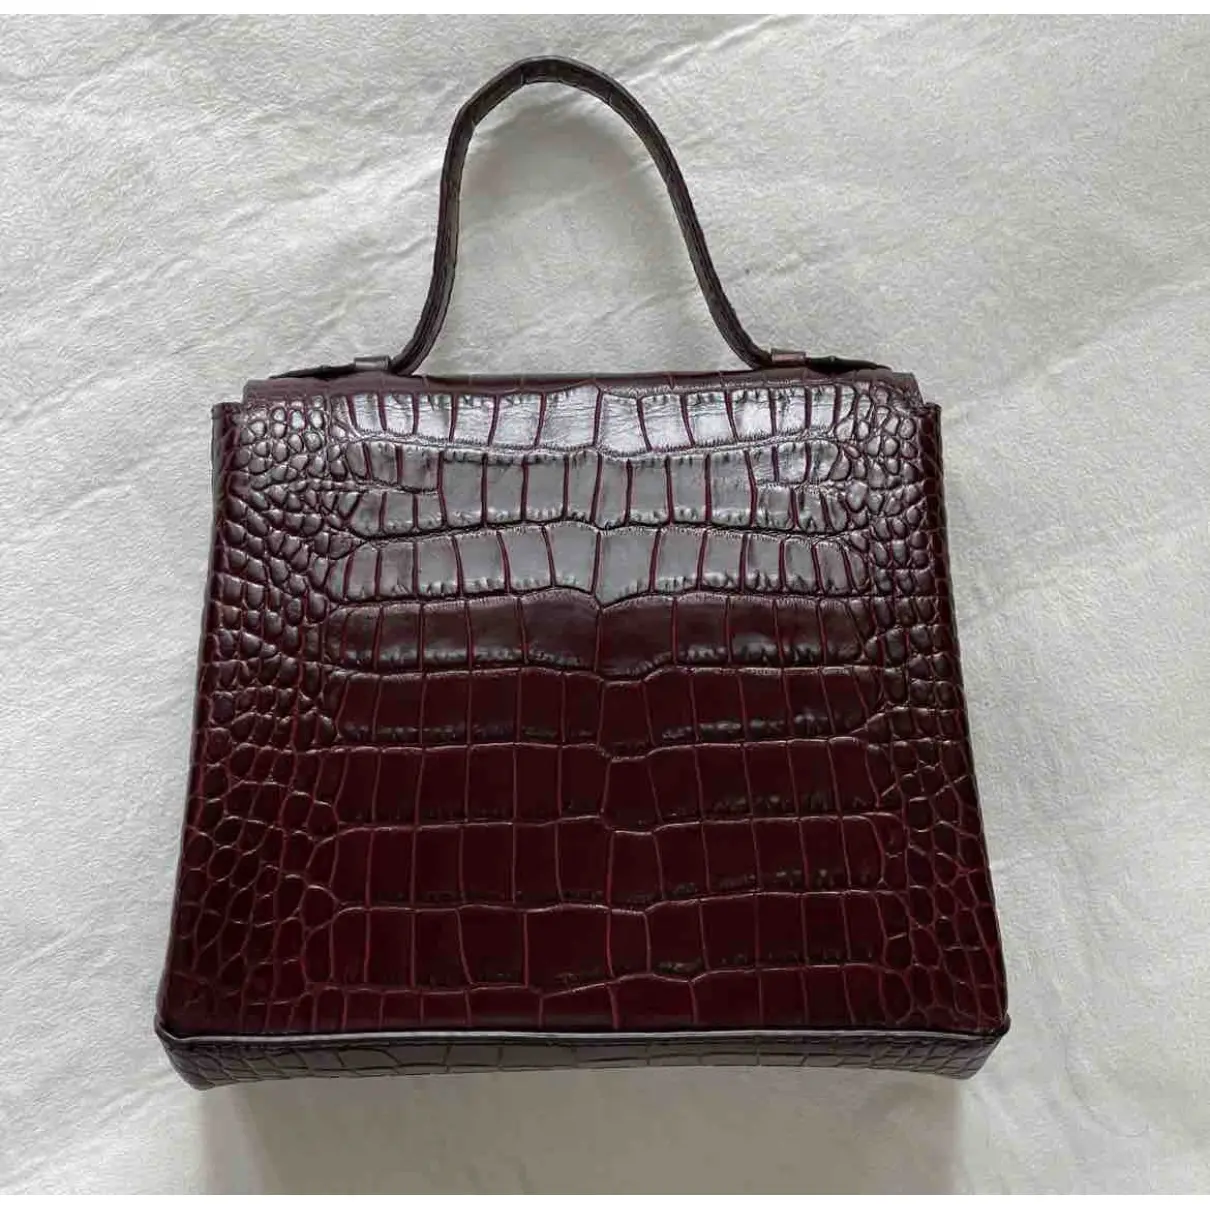 Buy Trademark Leather crossbody bag online